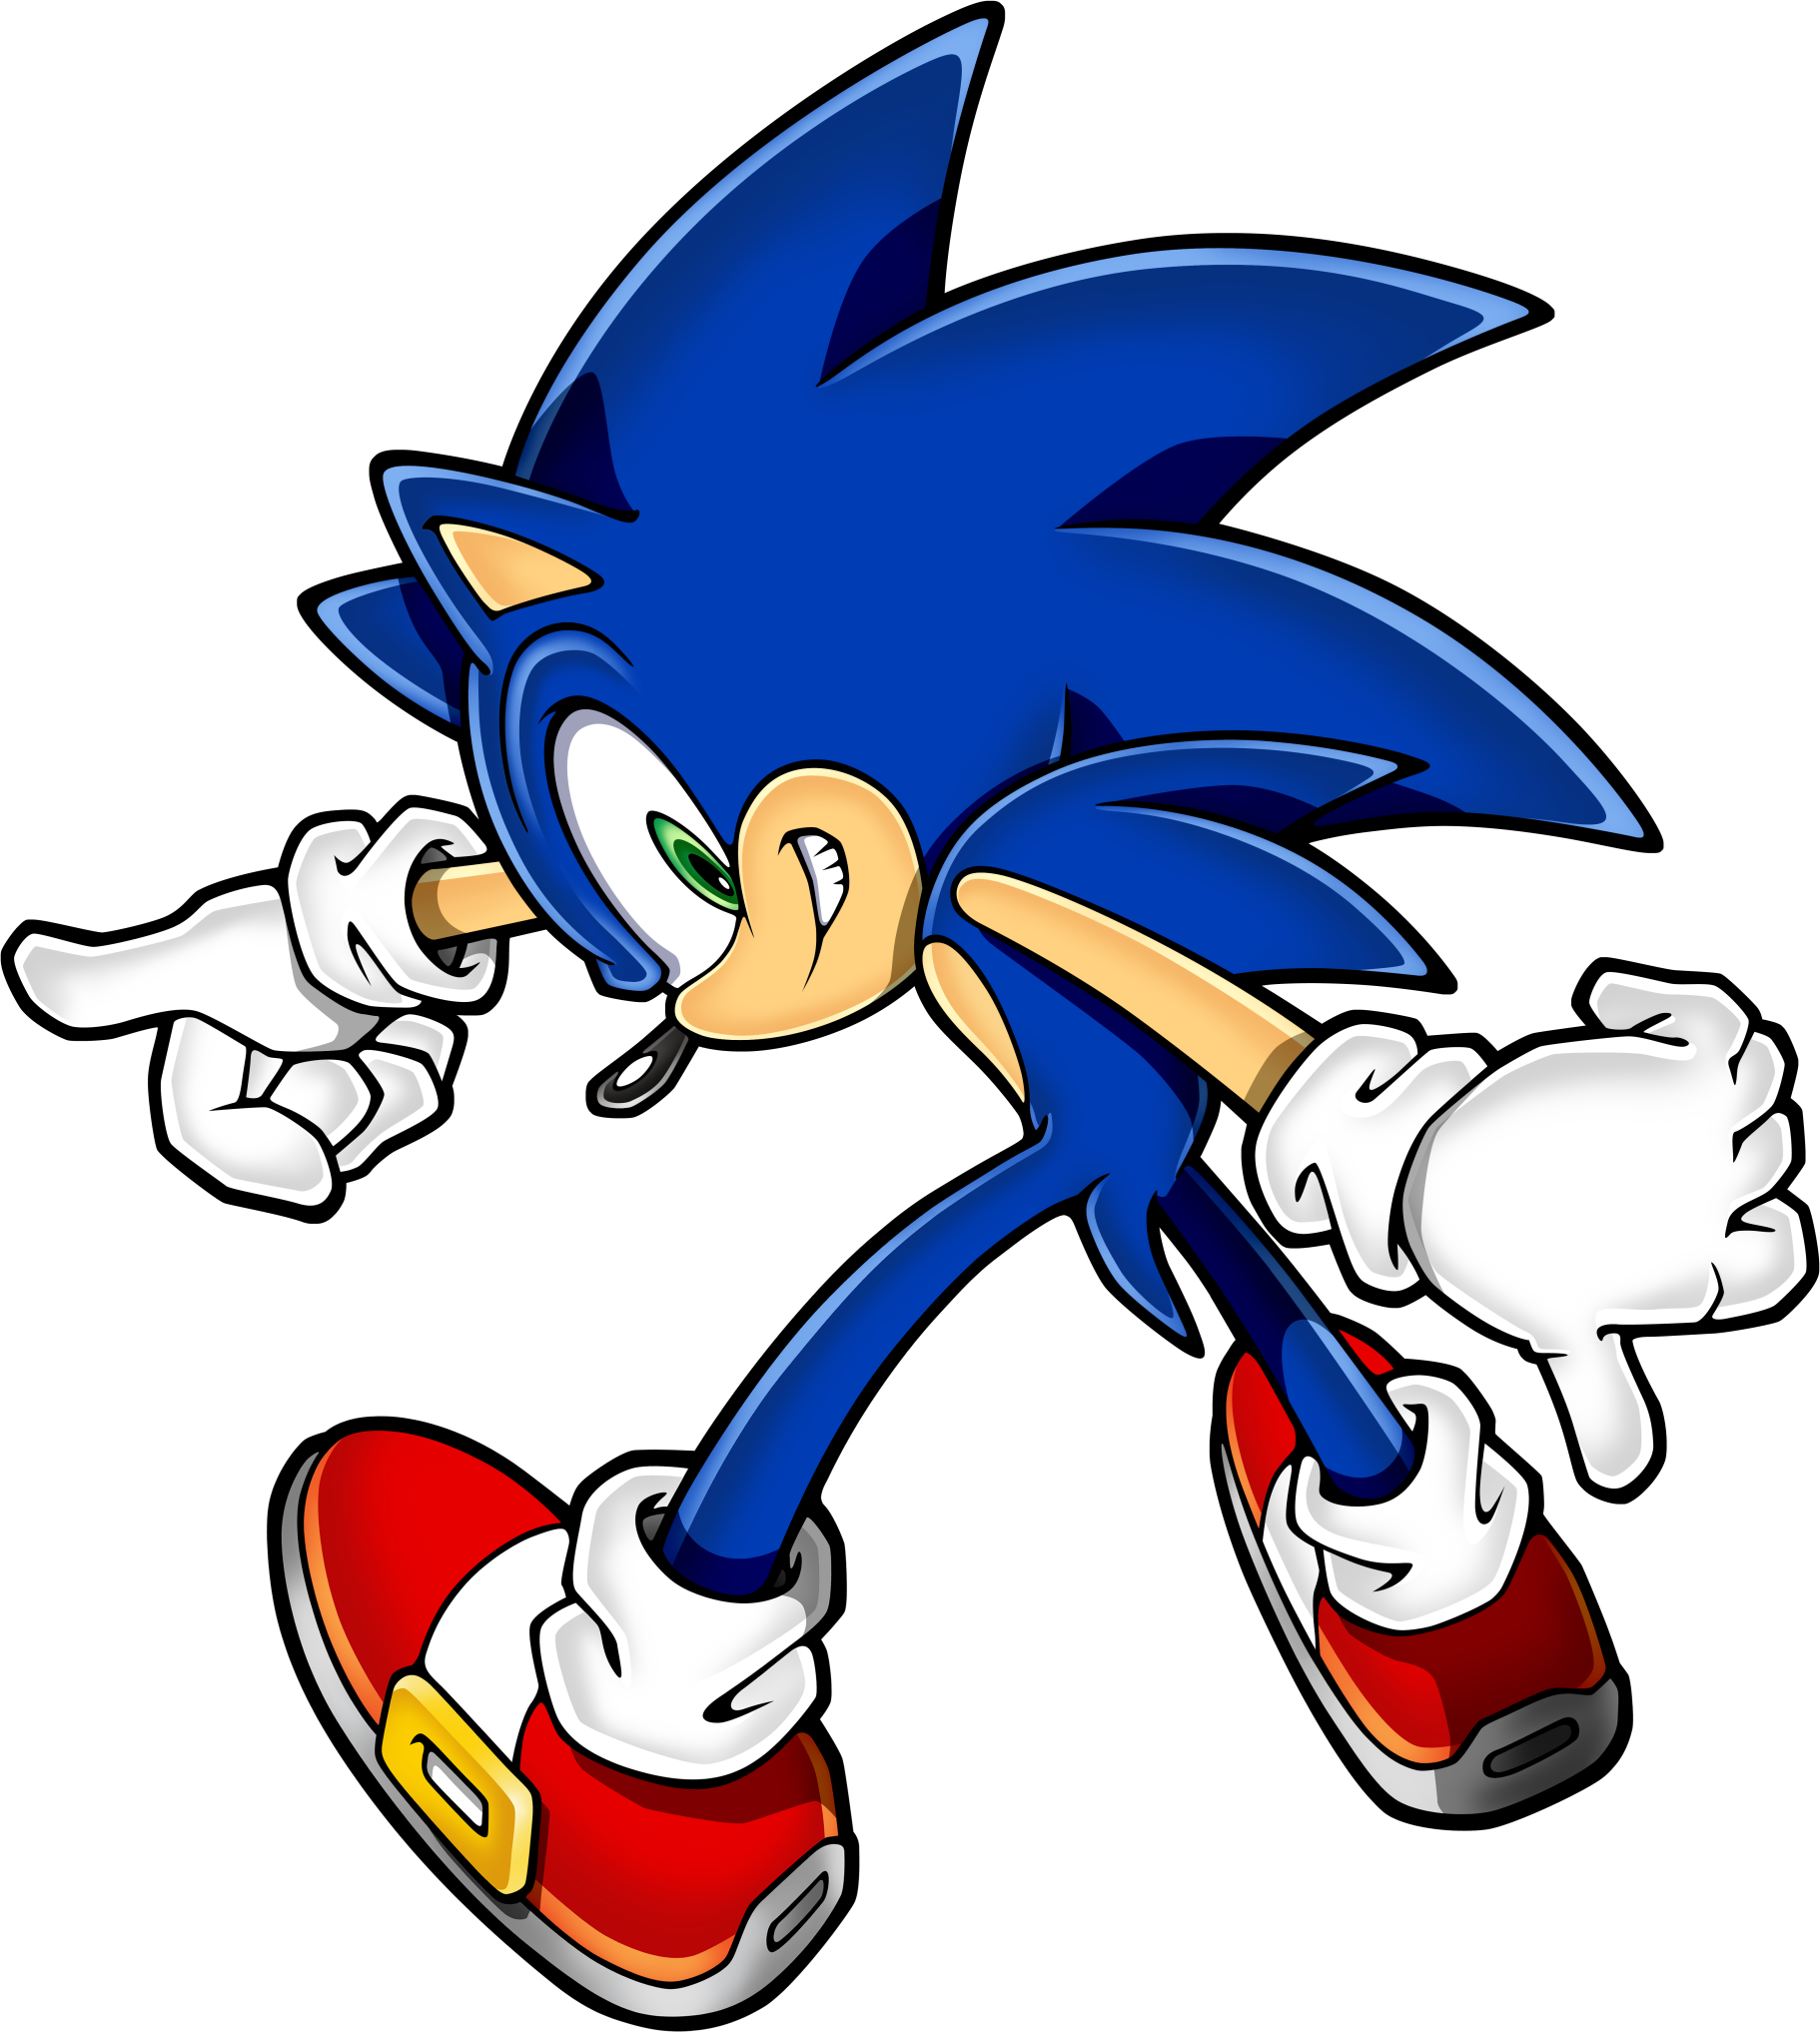 Sonic Art Assets Dvd   Sonic The Hedgehog   8.png - Hedgehog, Transparent background PNG HD thumbnail